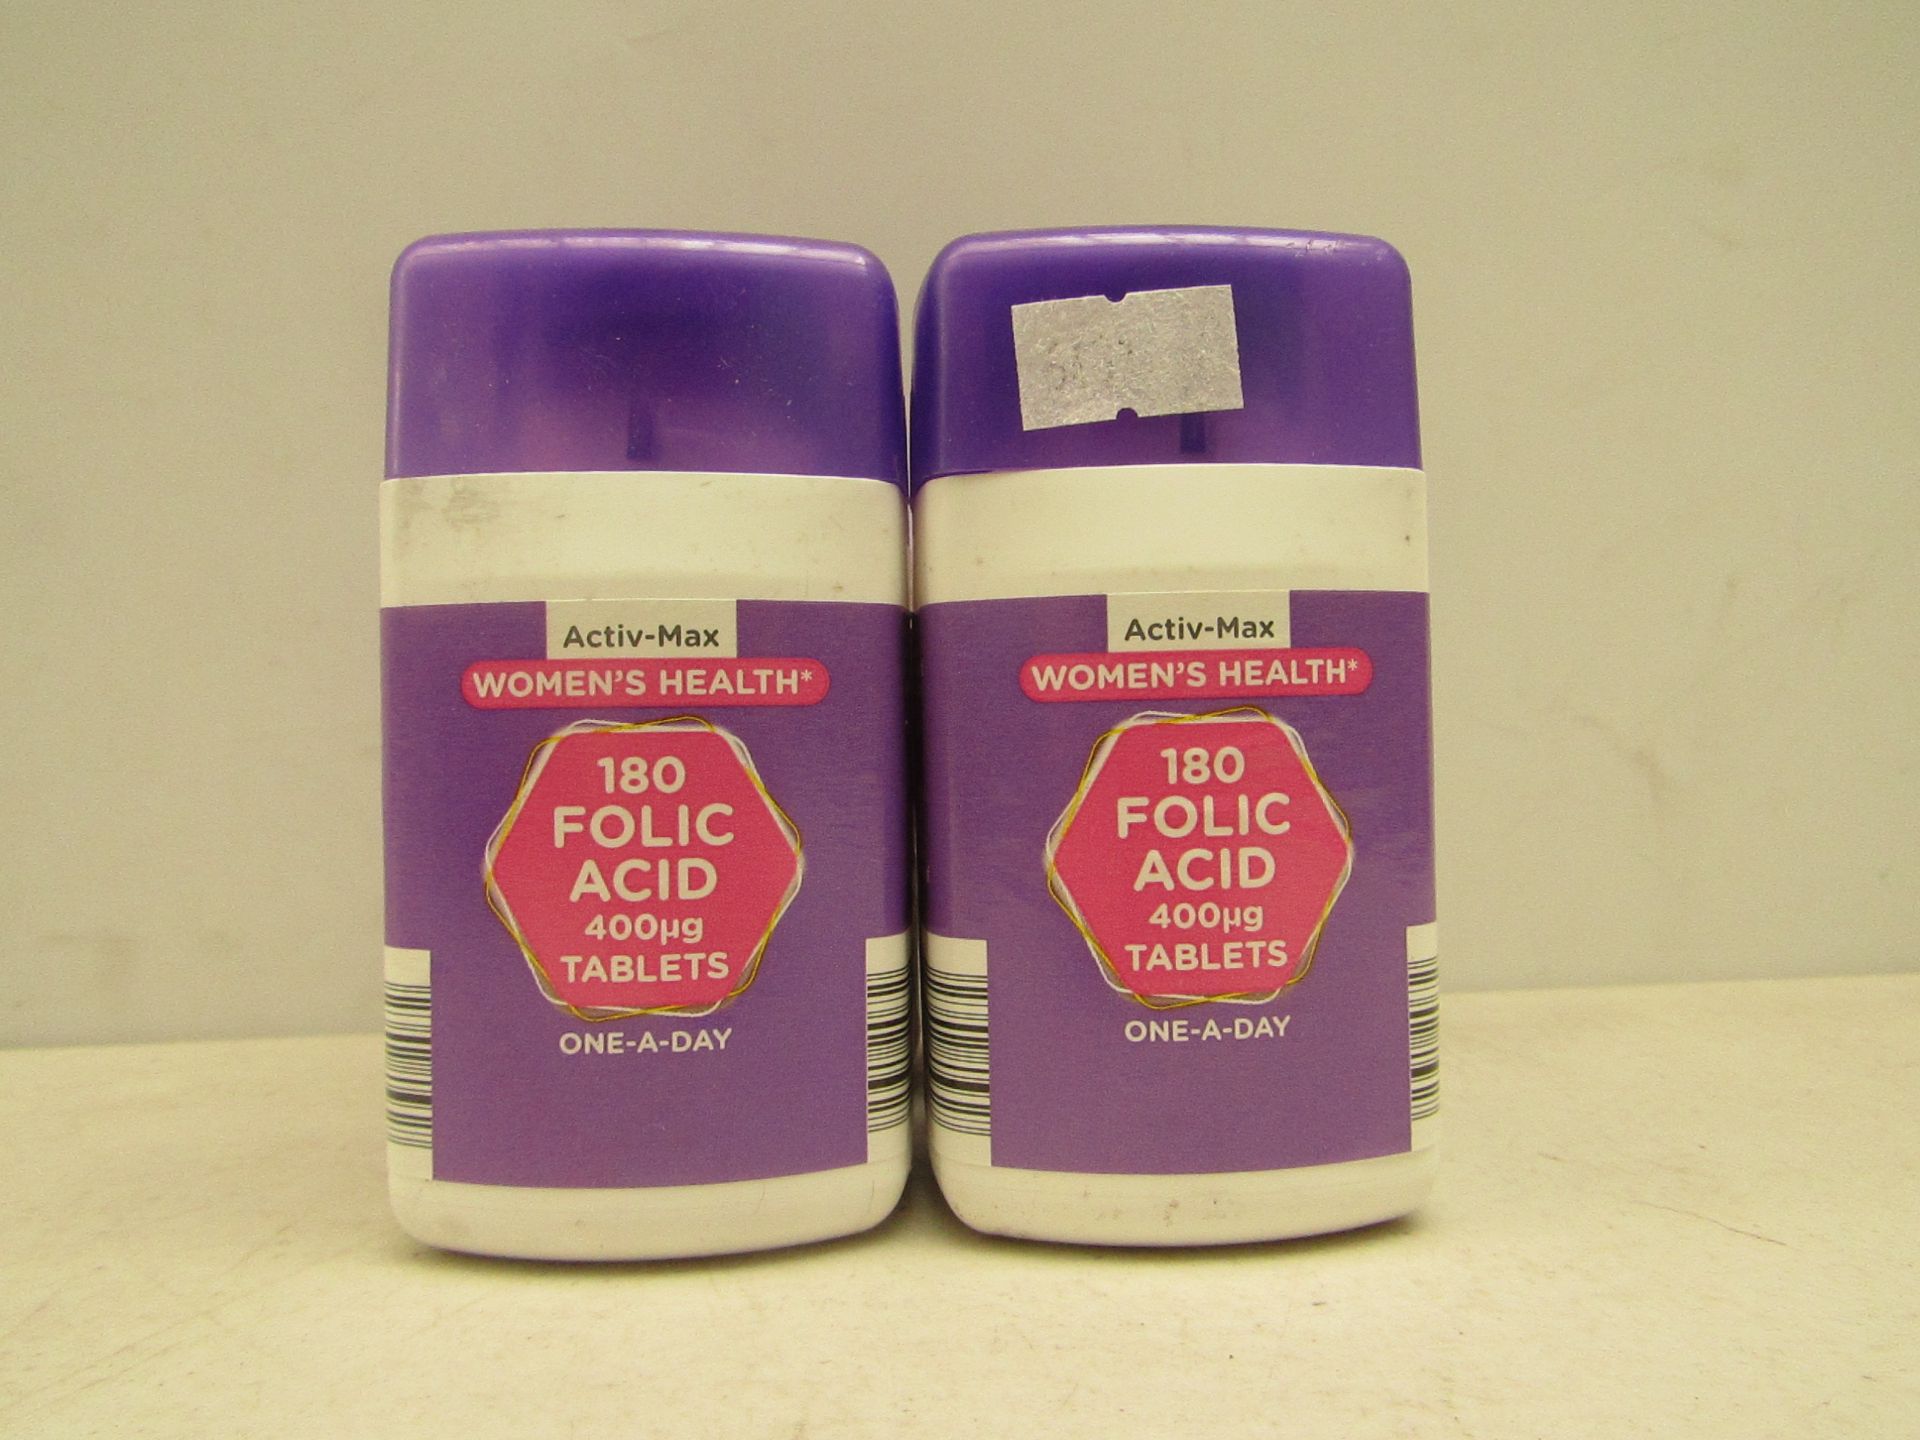 4x packs of Activ-max 180 folic acid tablets, new.